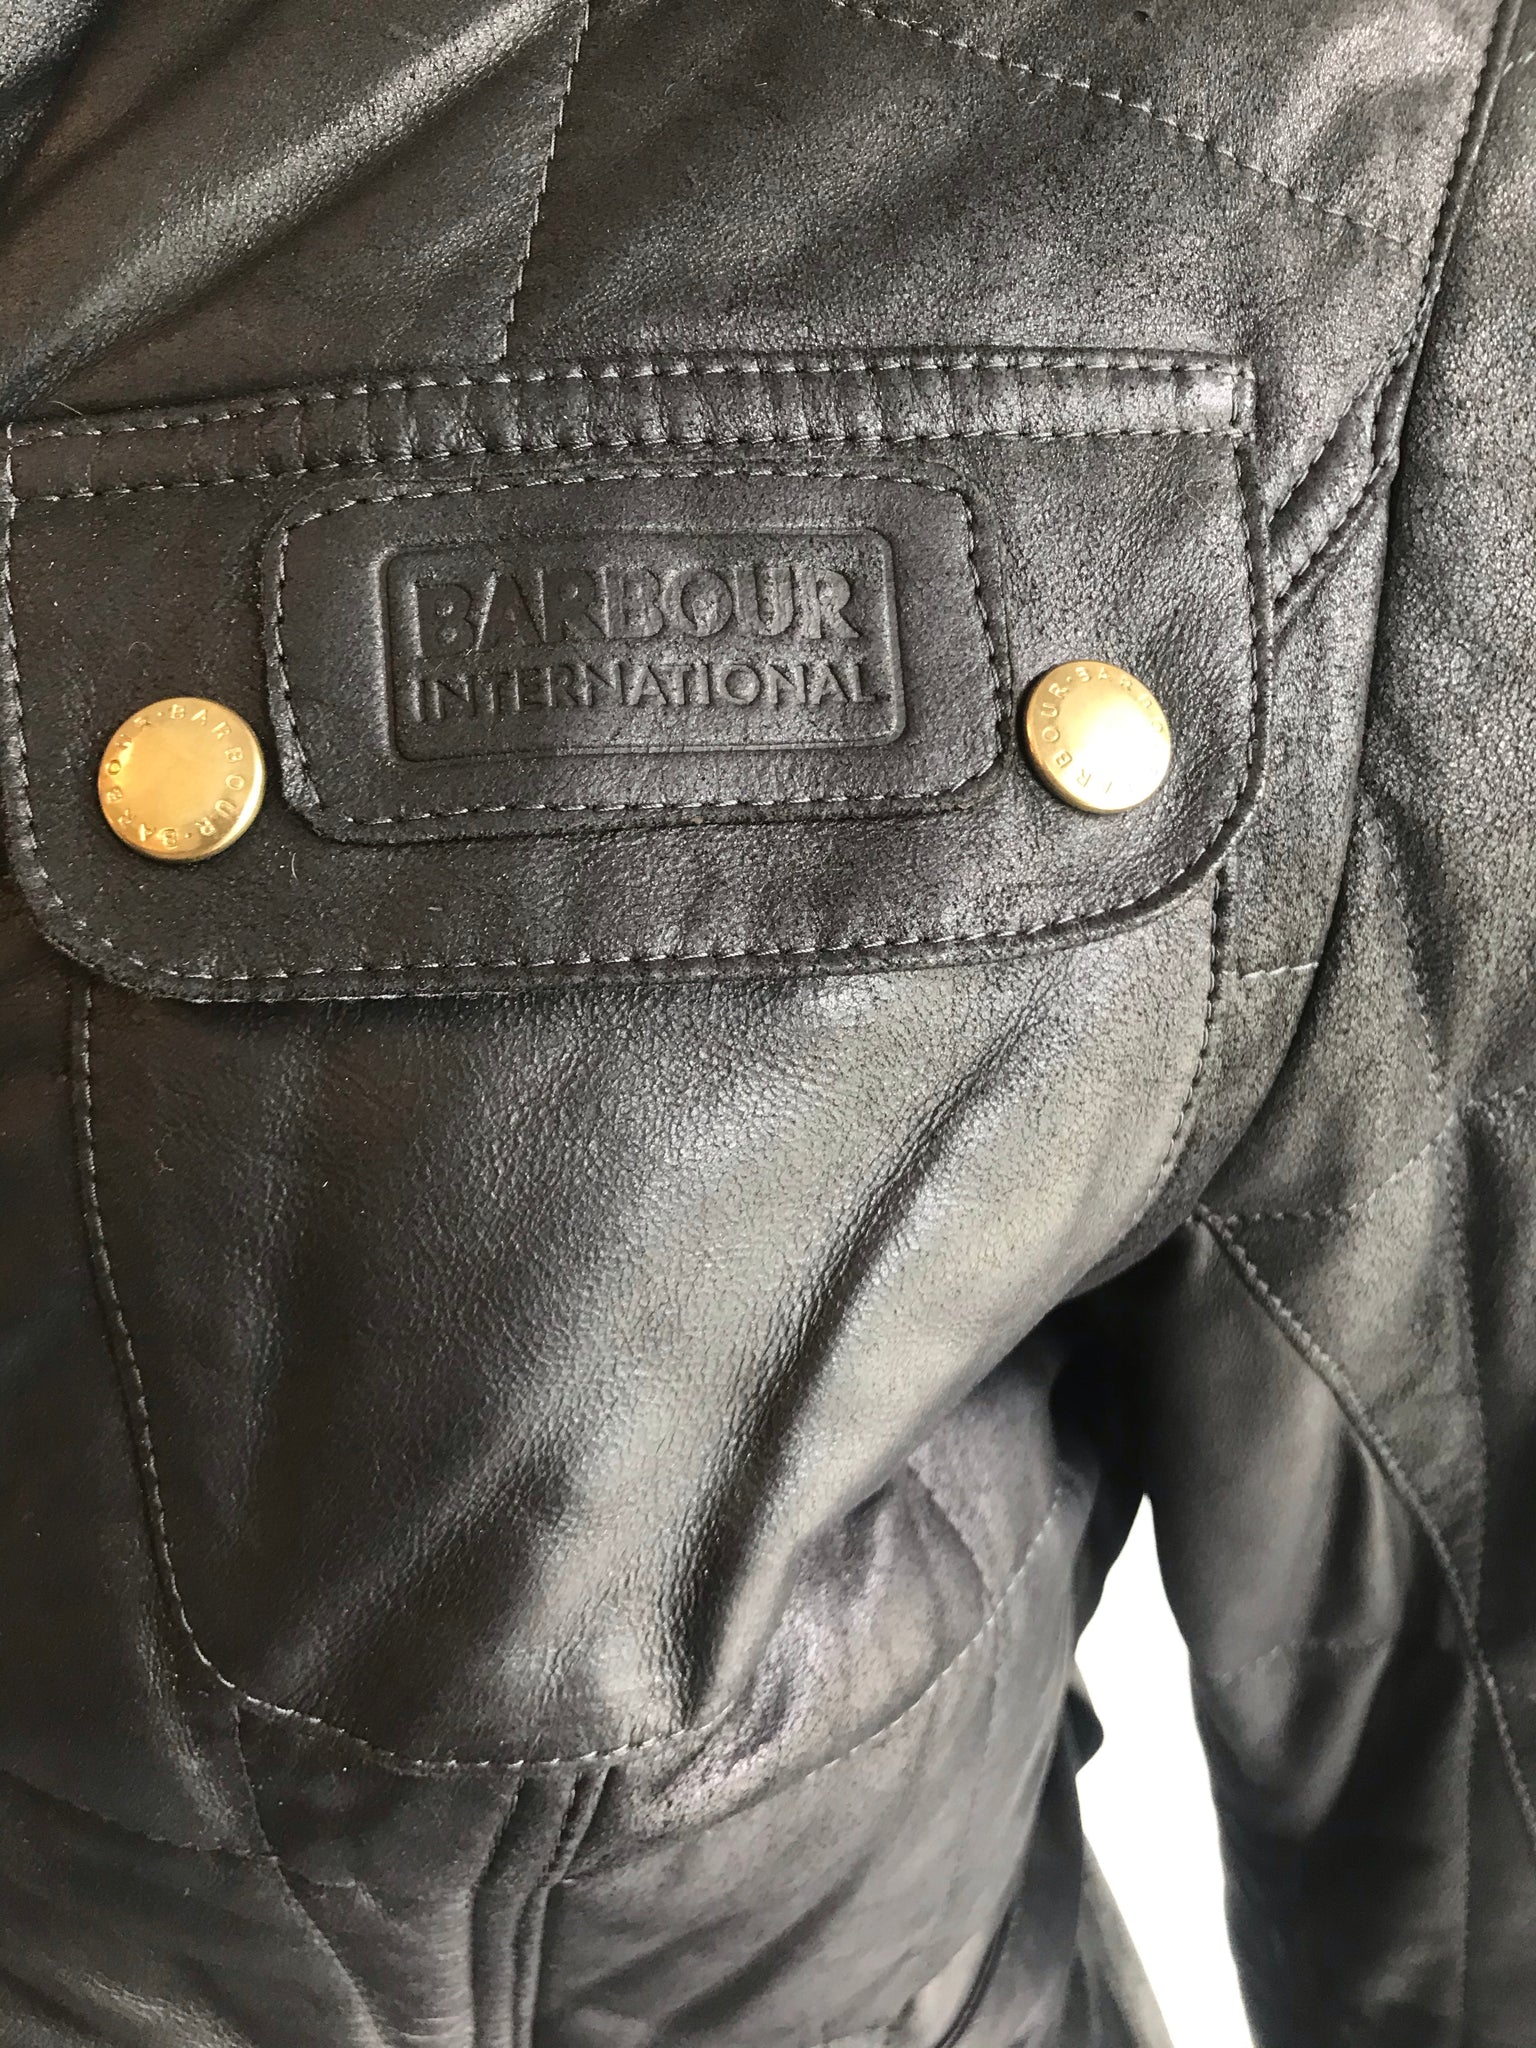 Isabella's Wardrobe Barbour International Leather Jacket.